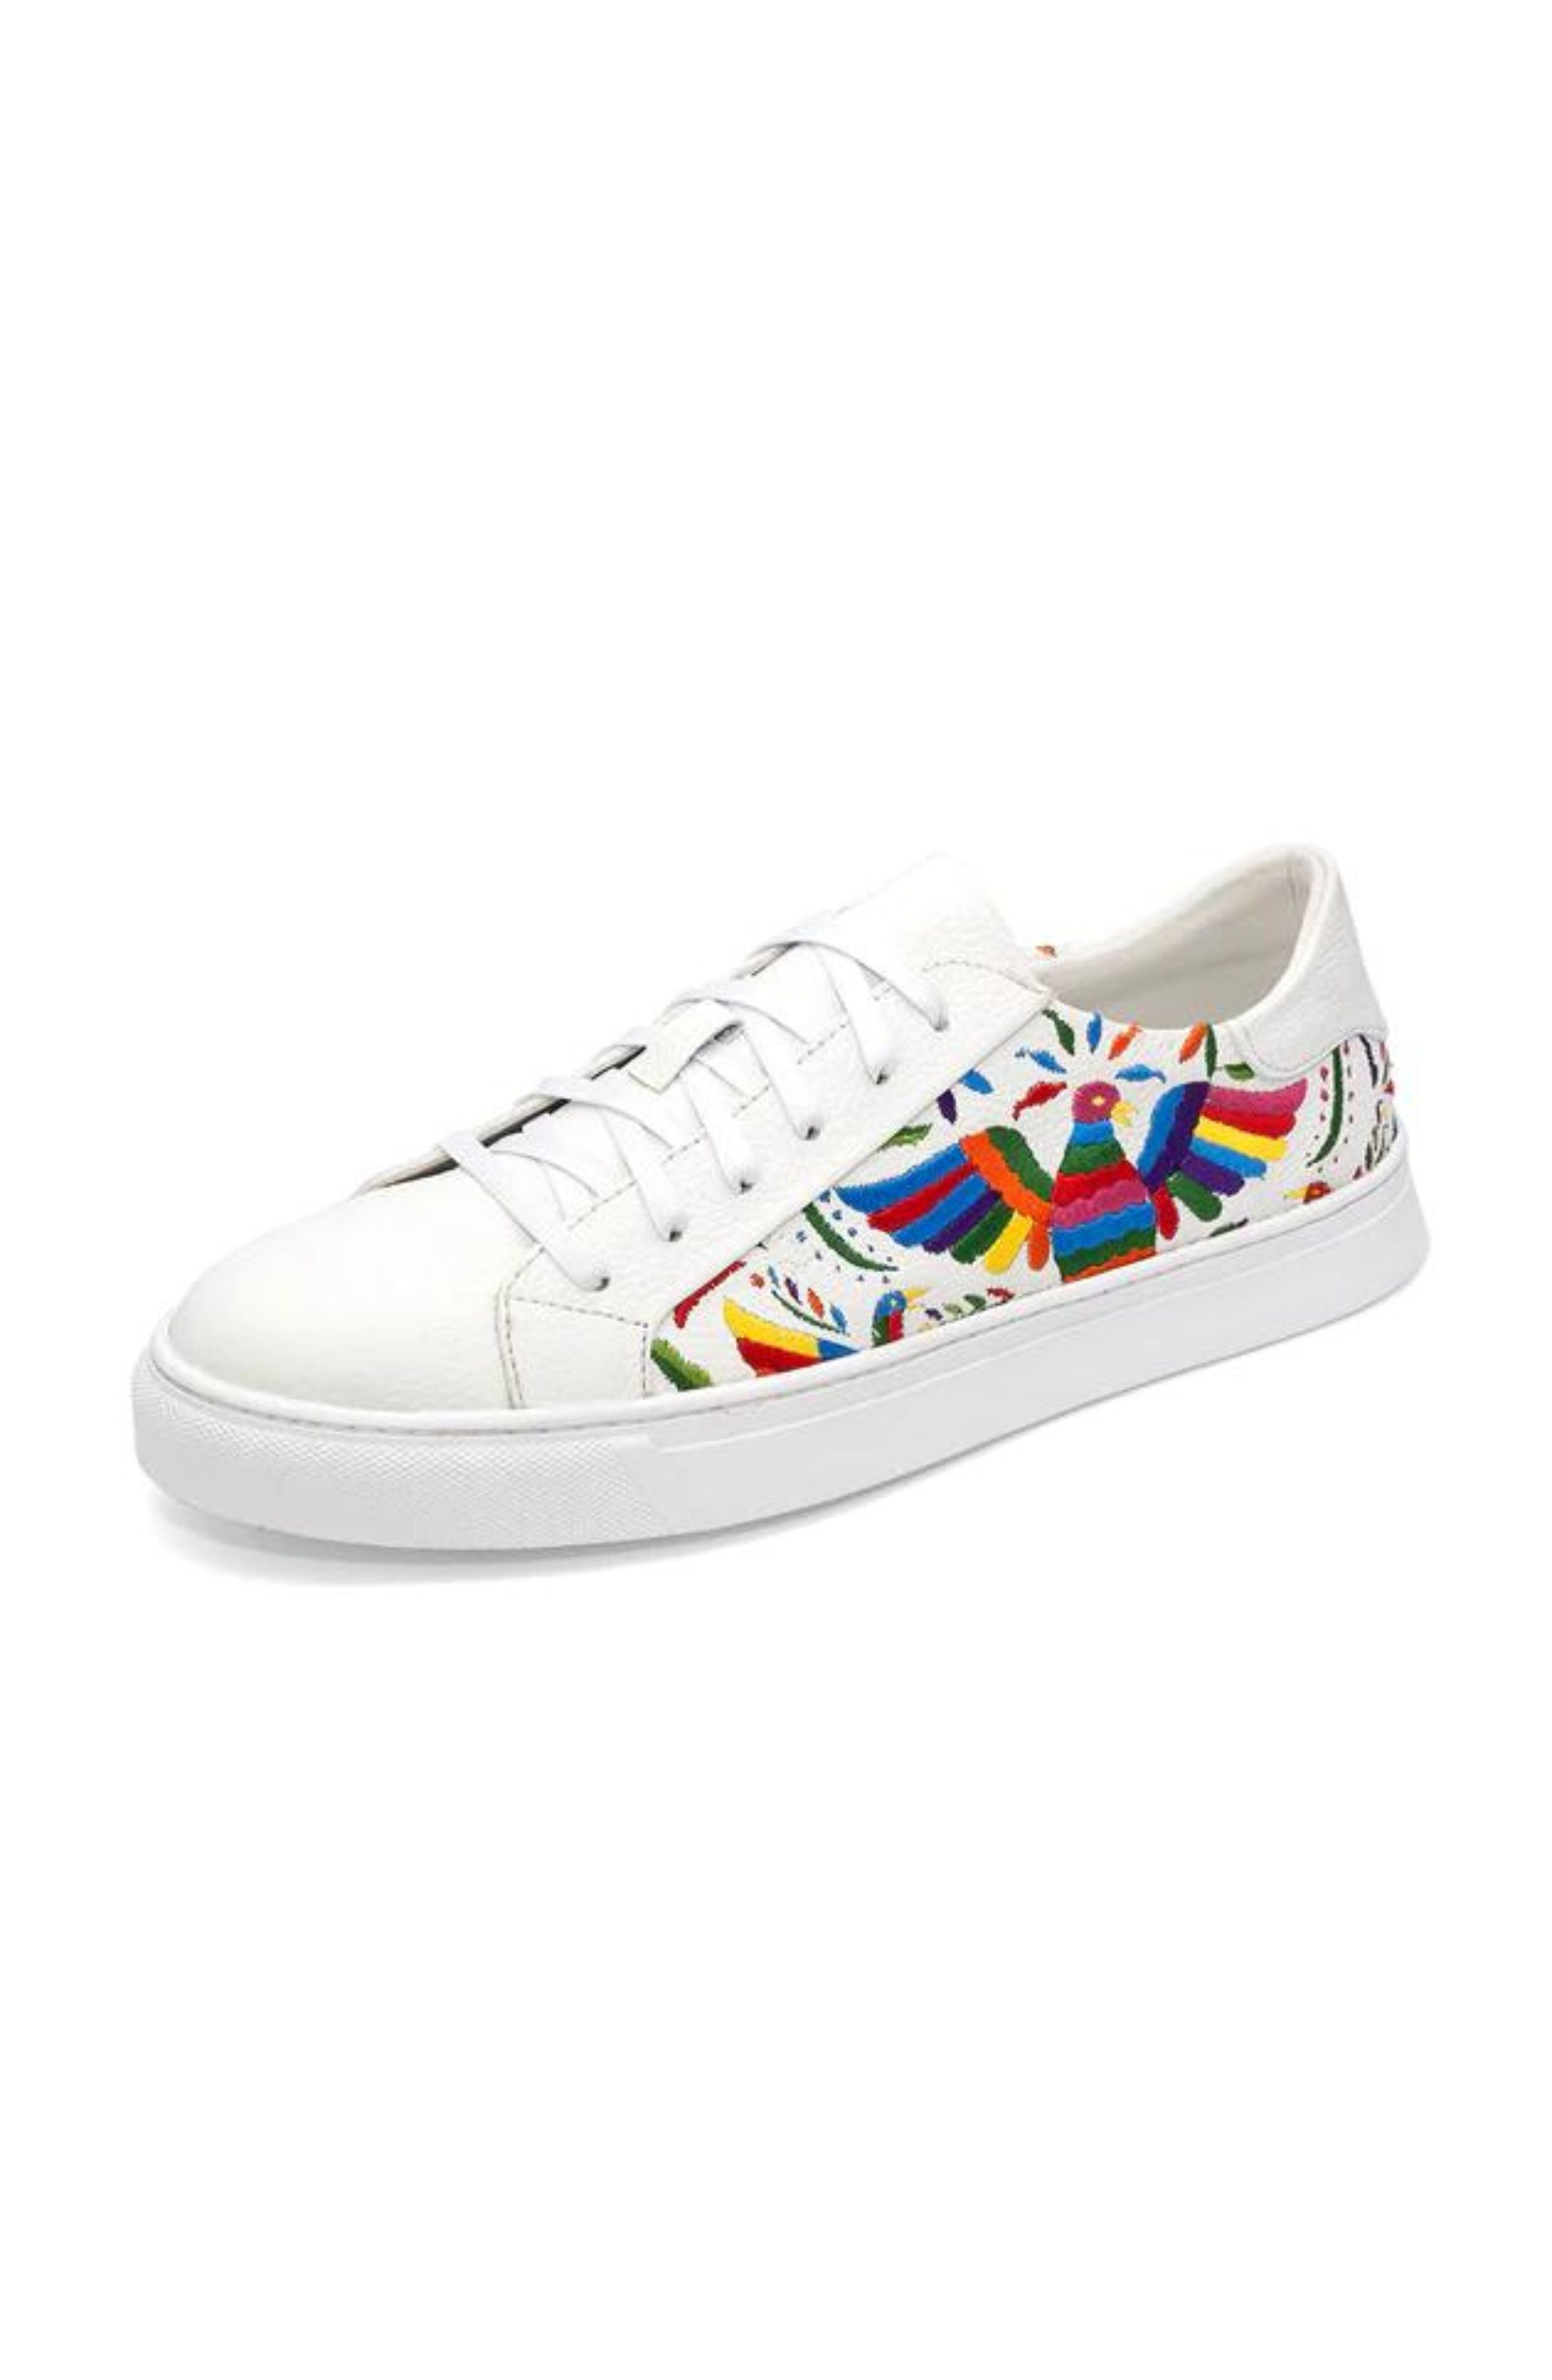 Charleston Shoe Co. Leon - White Rainbow